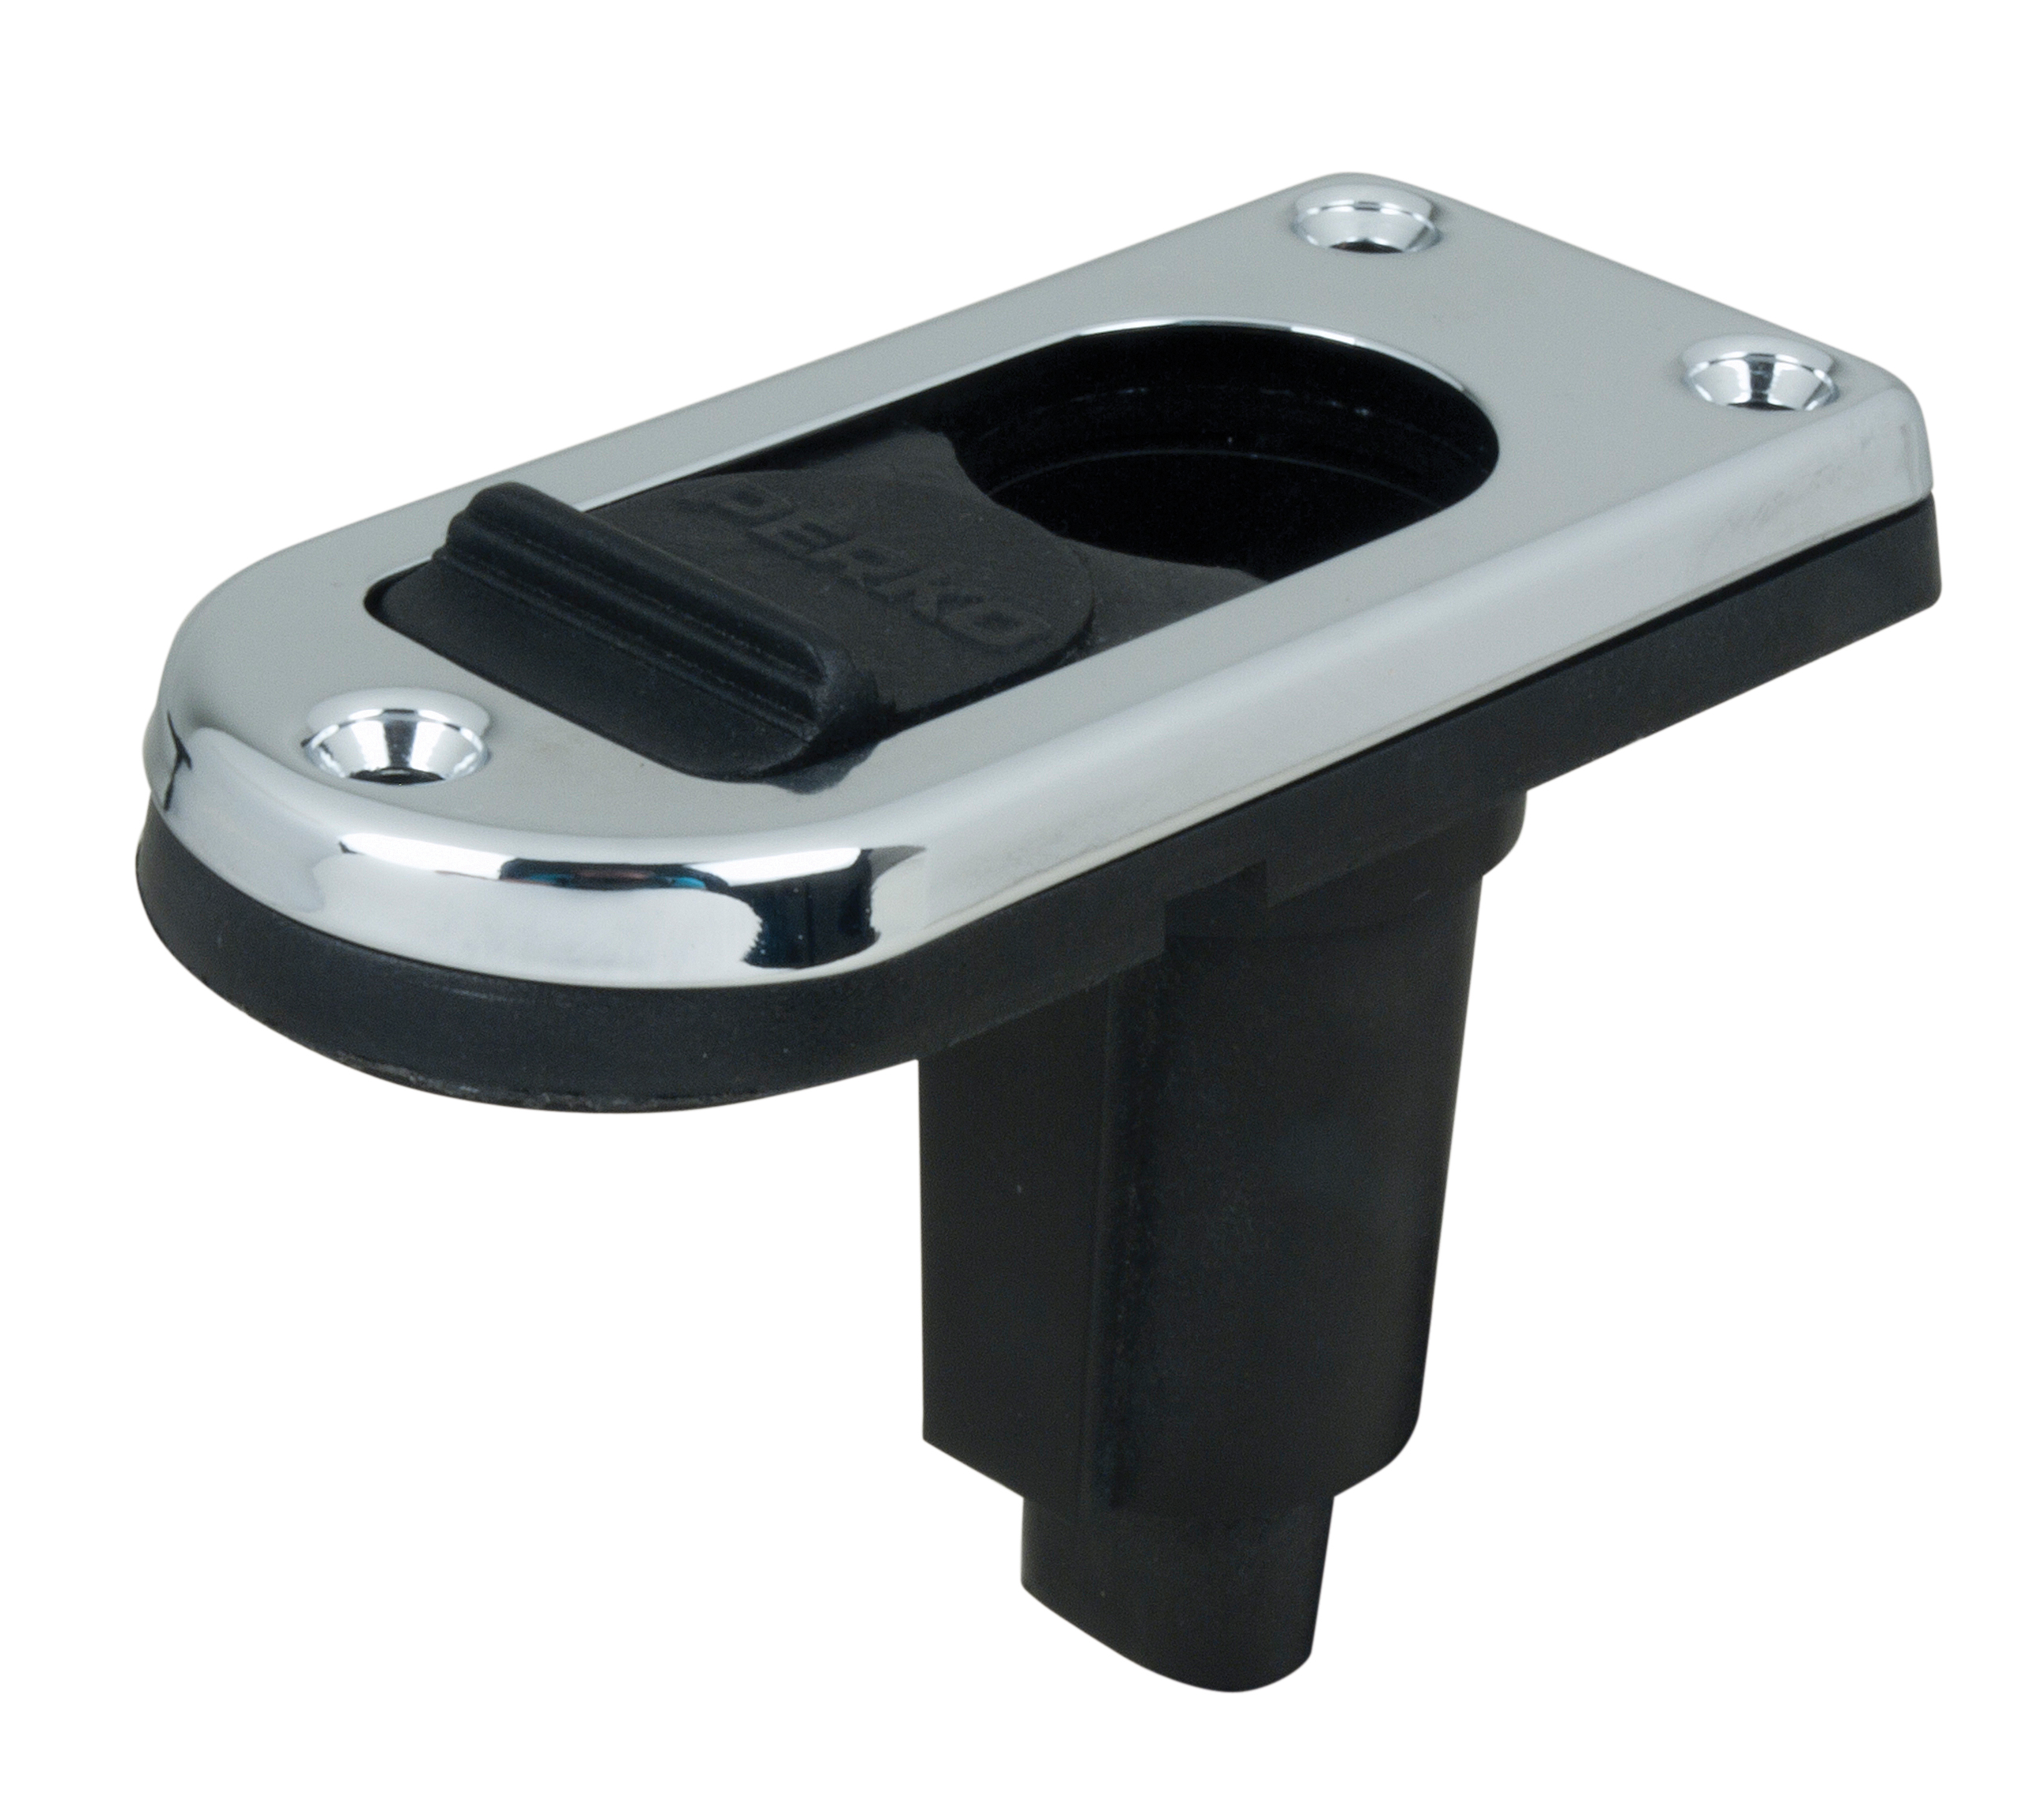 PBL-600-0068-00 Miniature Wedge Base Lamp Socket for Stern